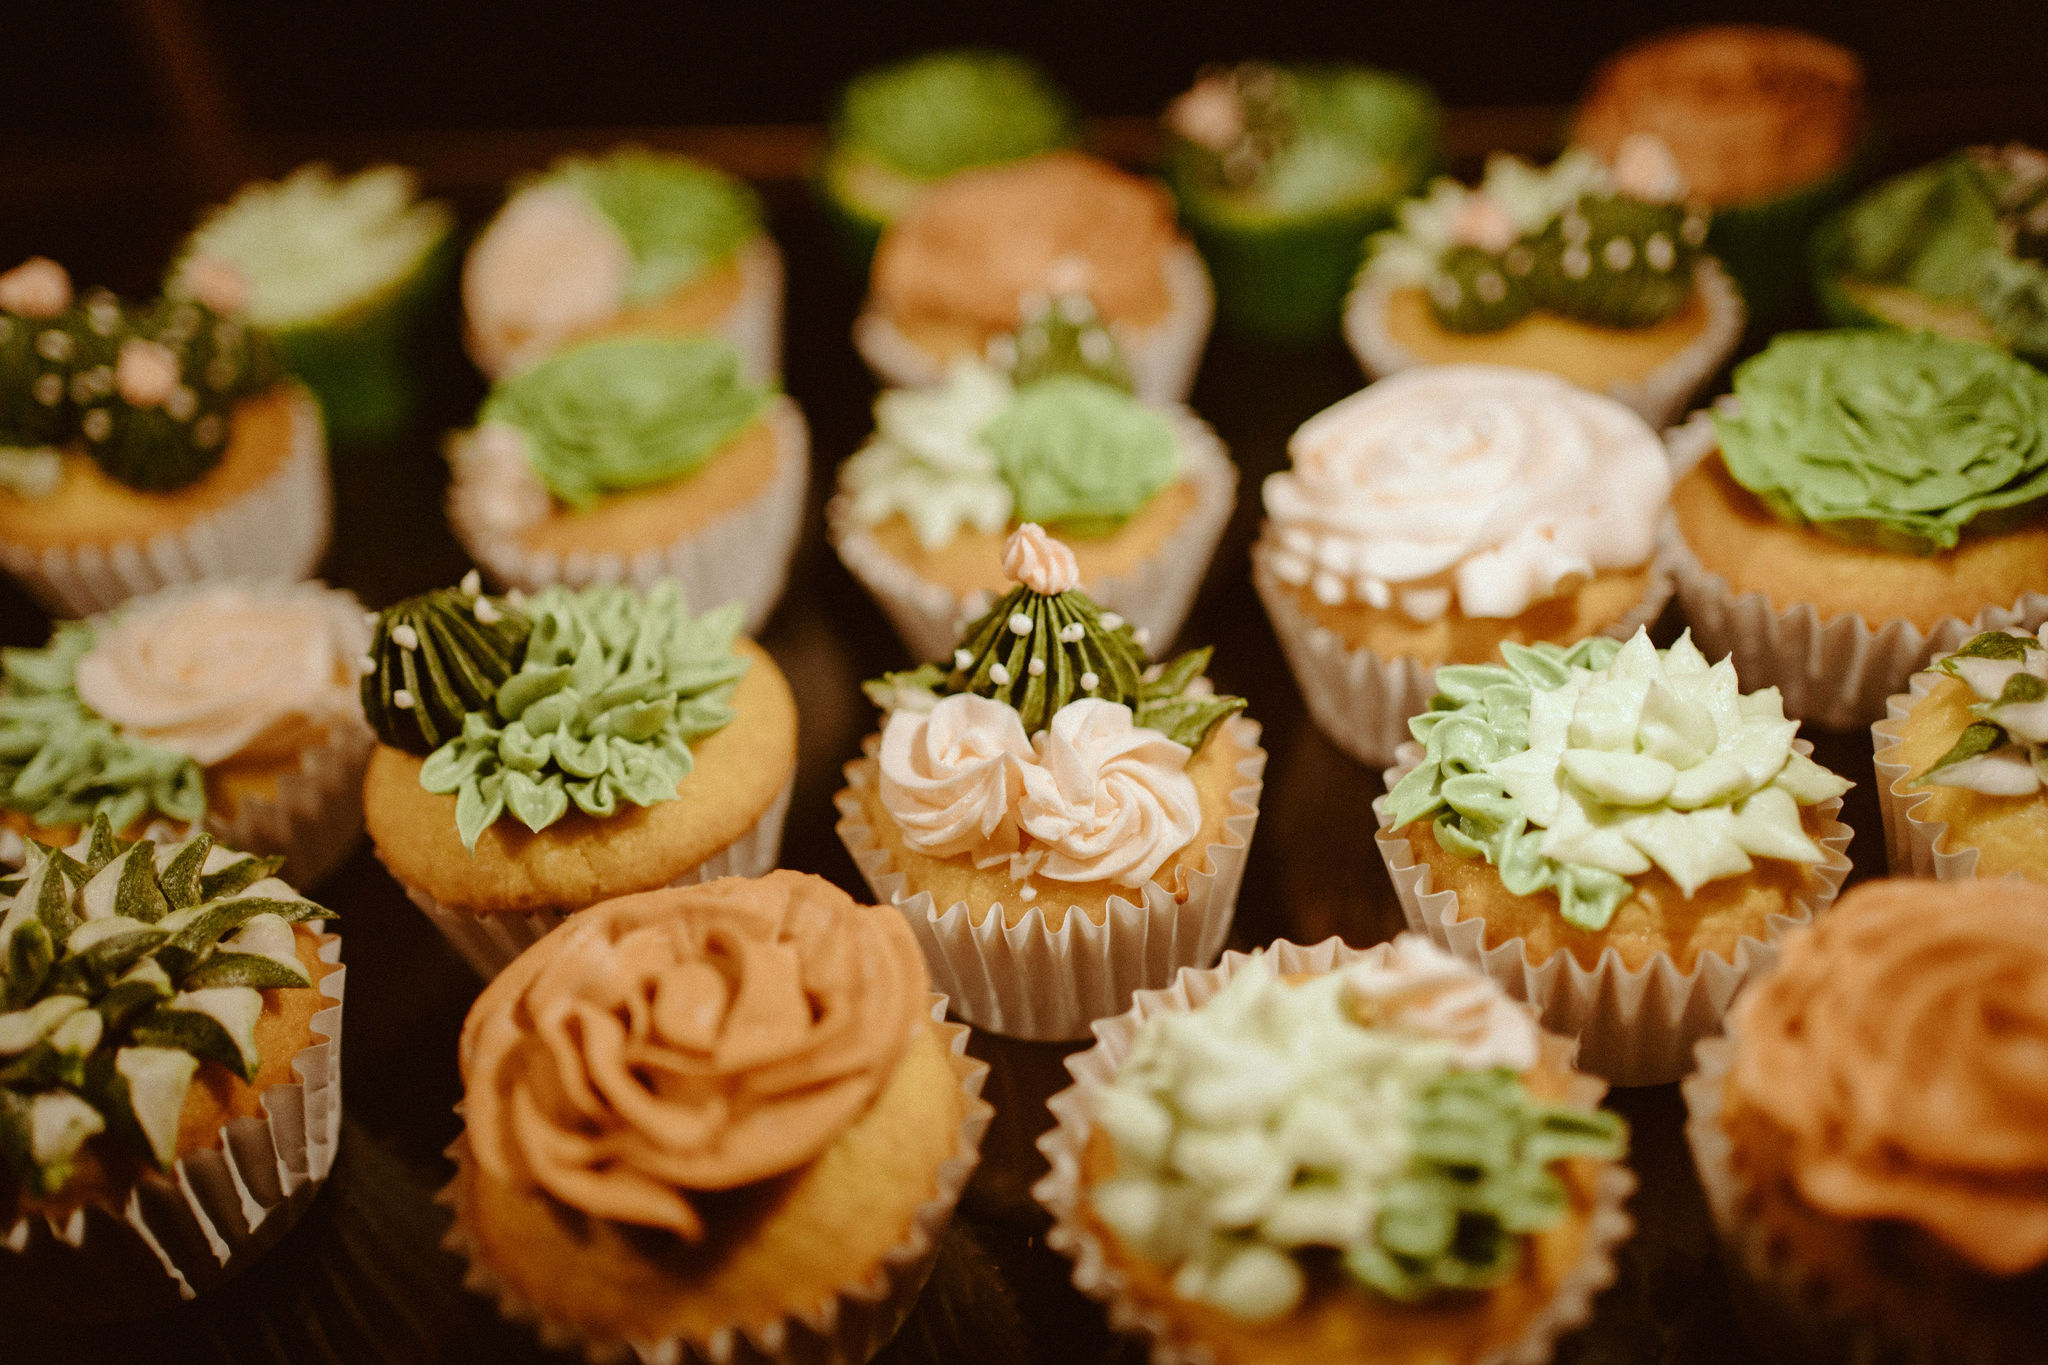 Cute succulent inspired cupcakes